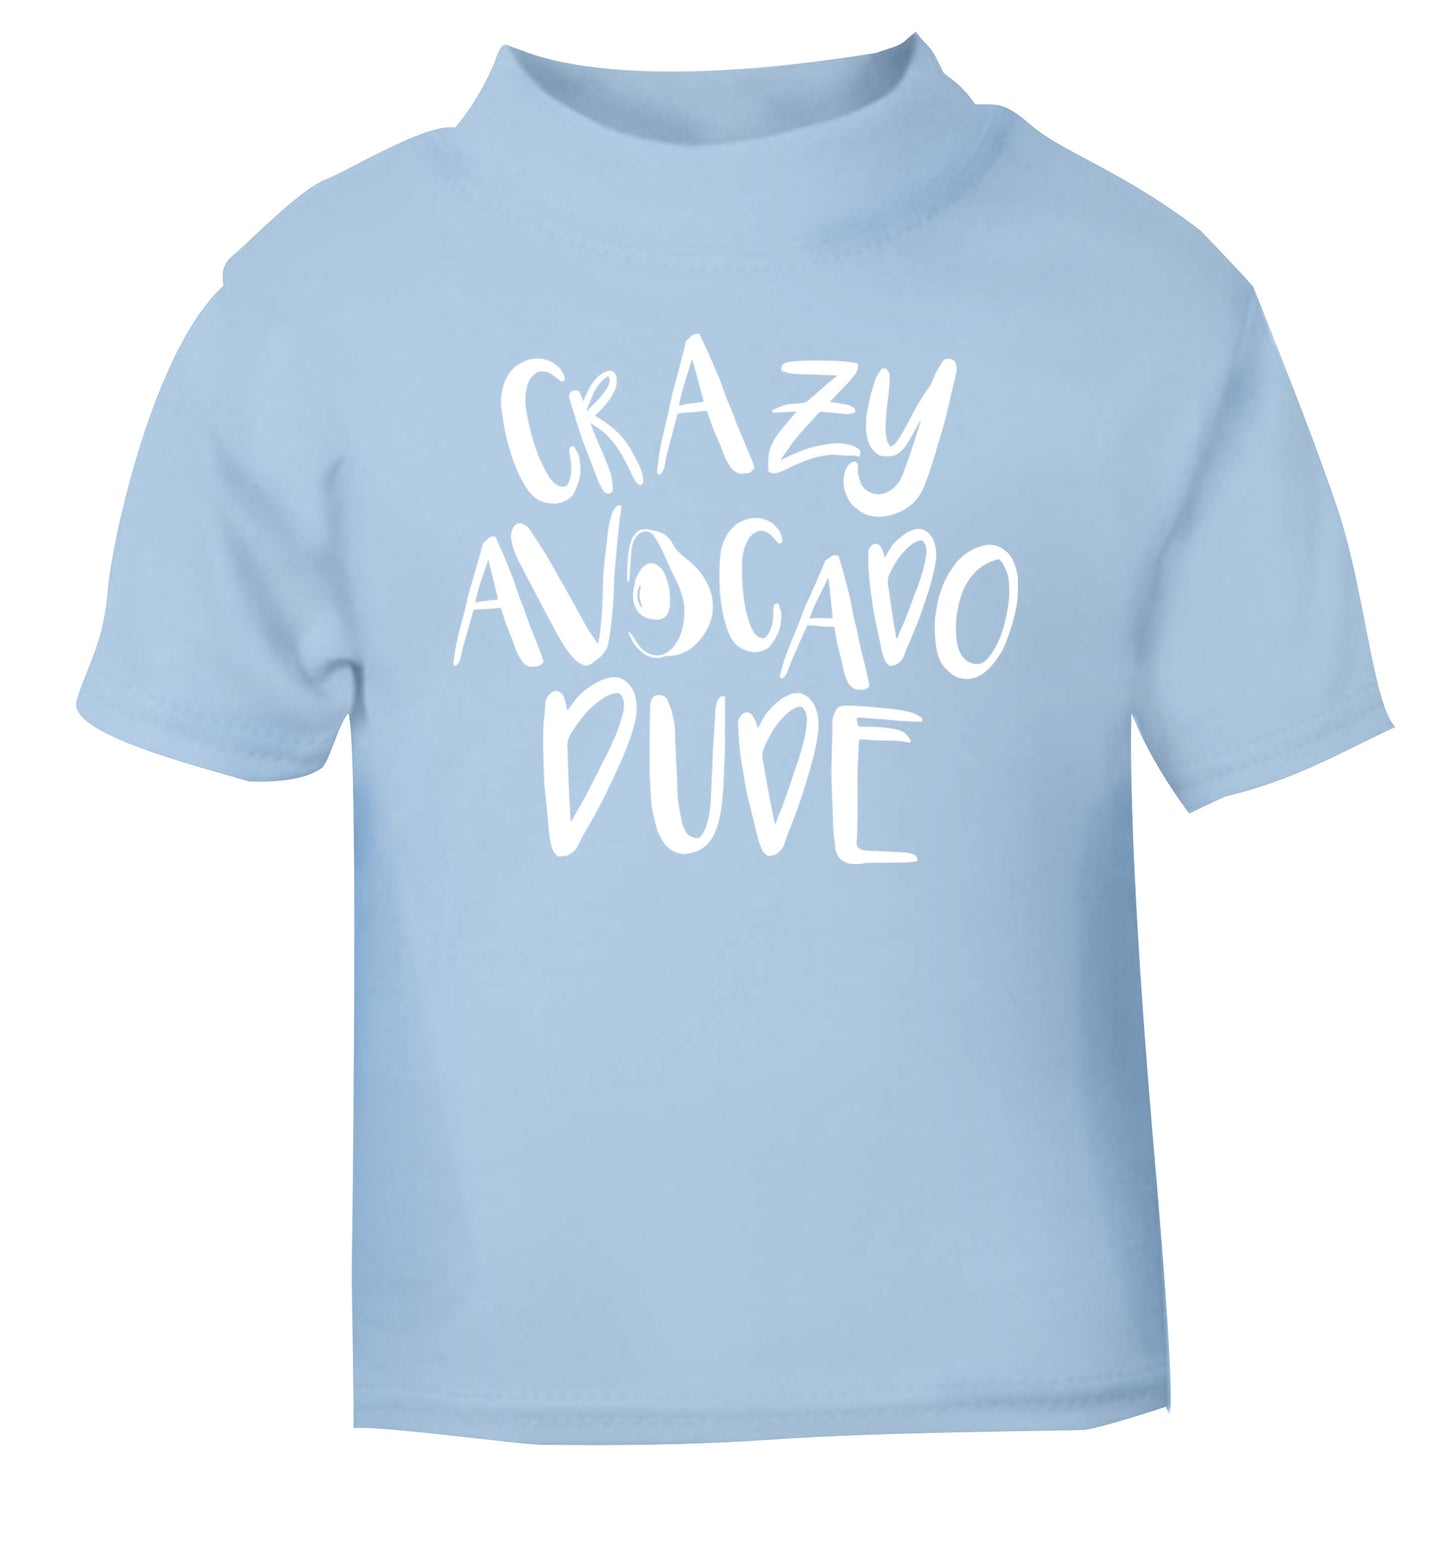 Crazy avocado dude light blue Baby Toddler Tshirt 2 Years